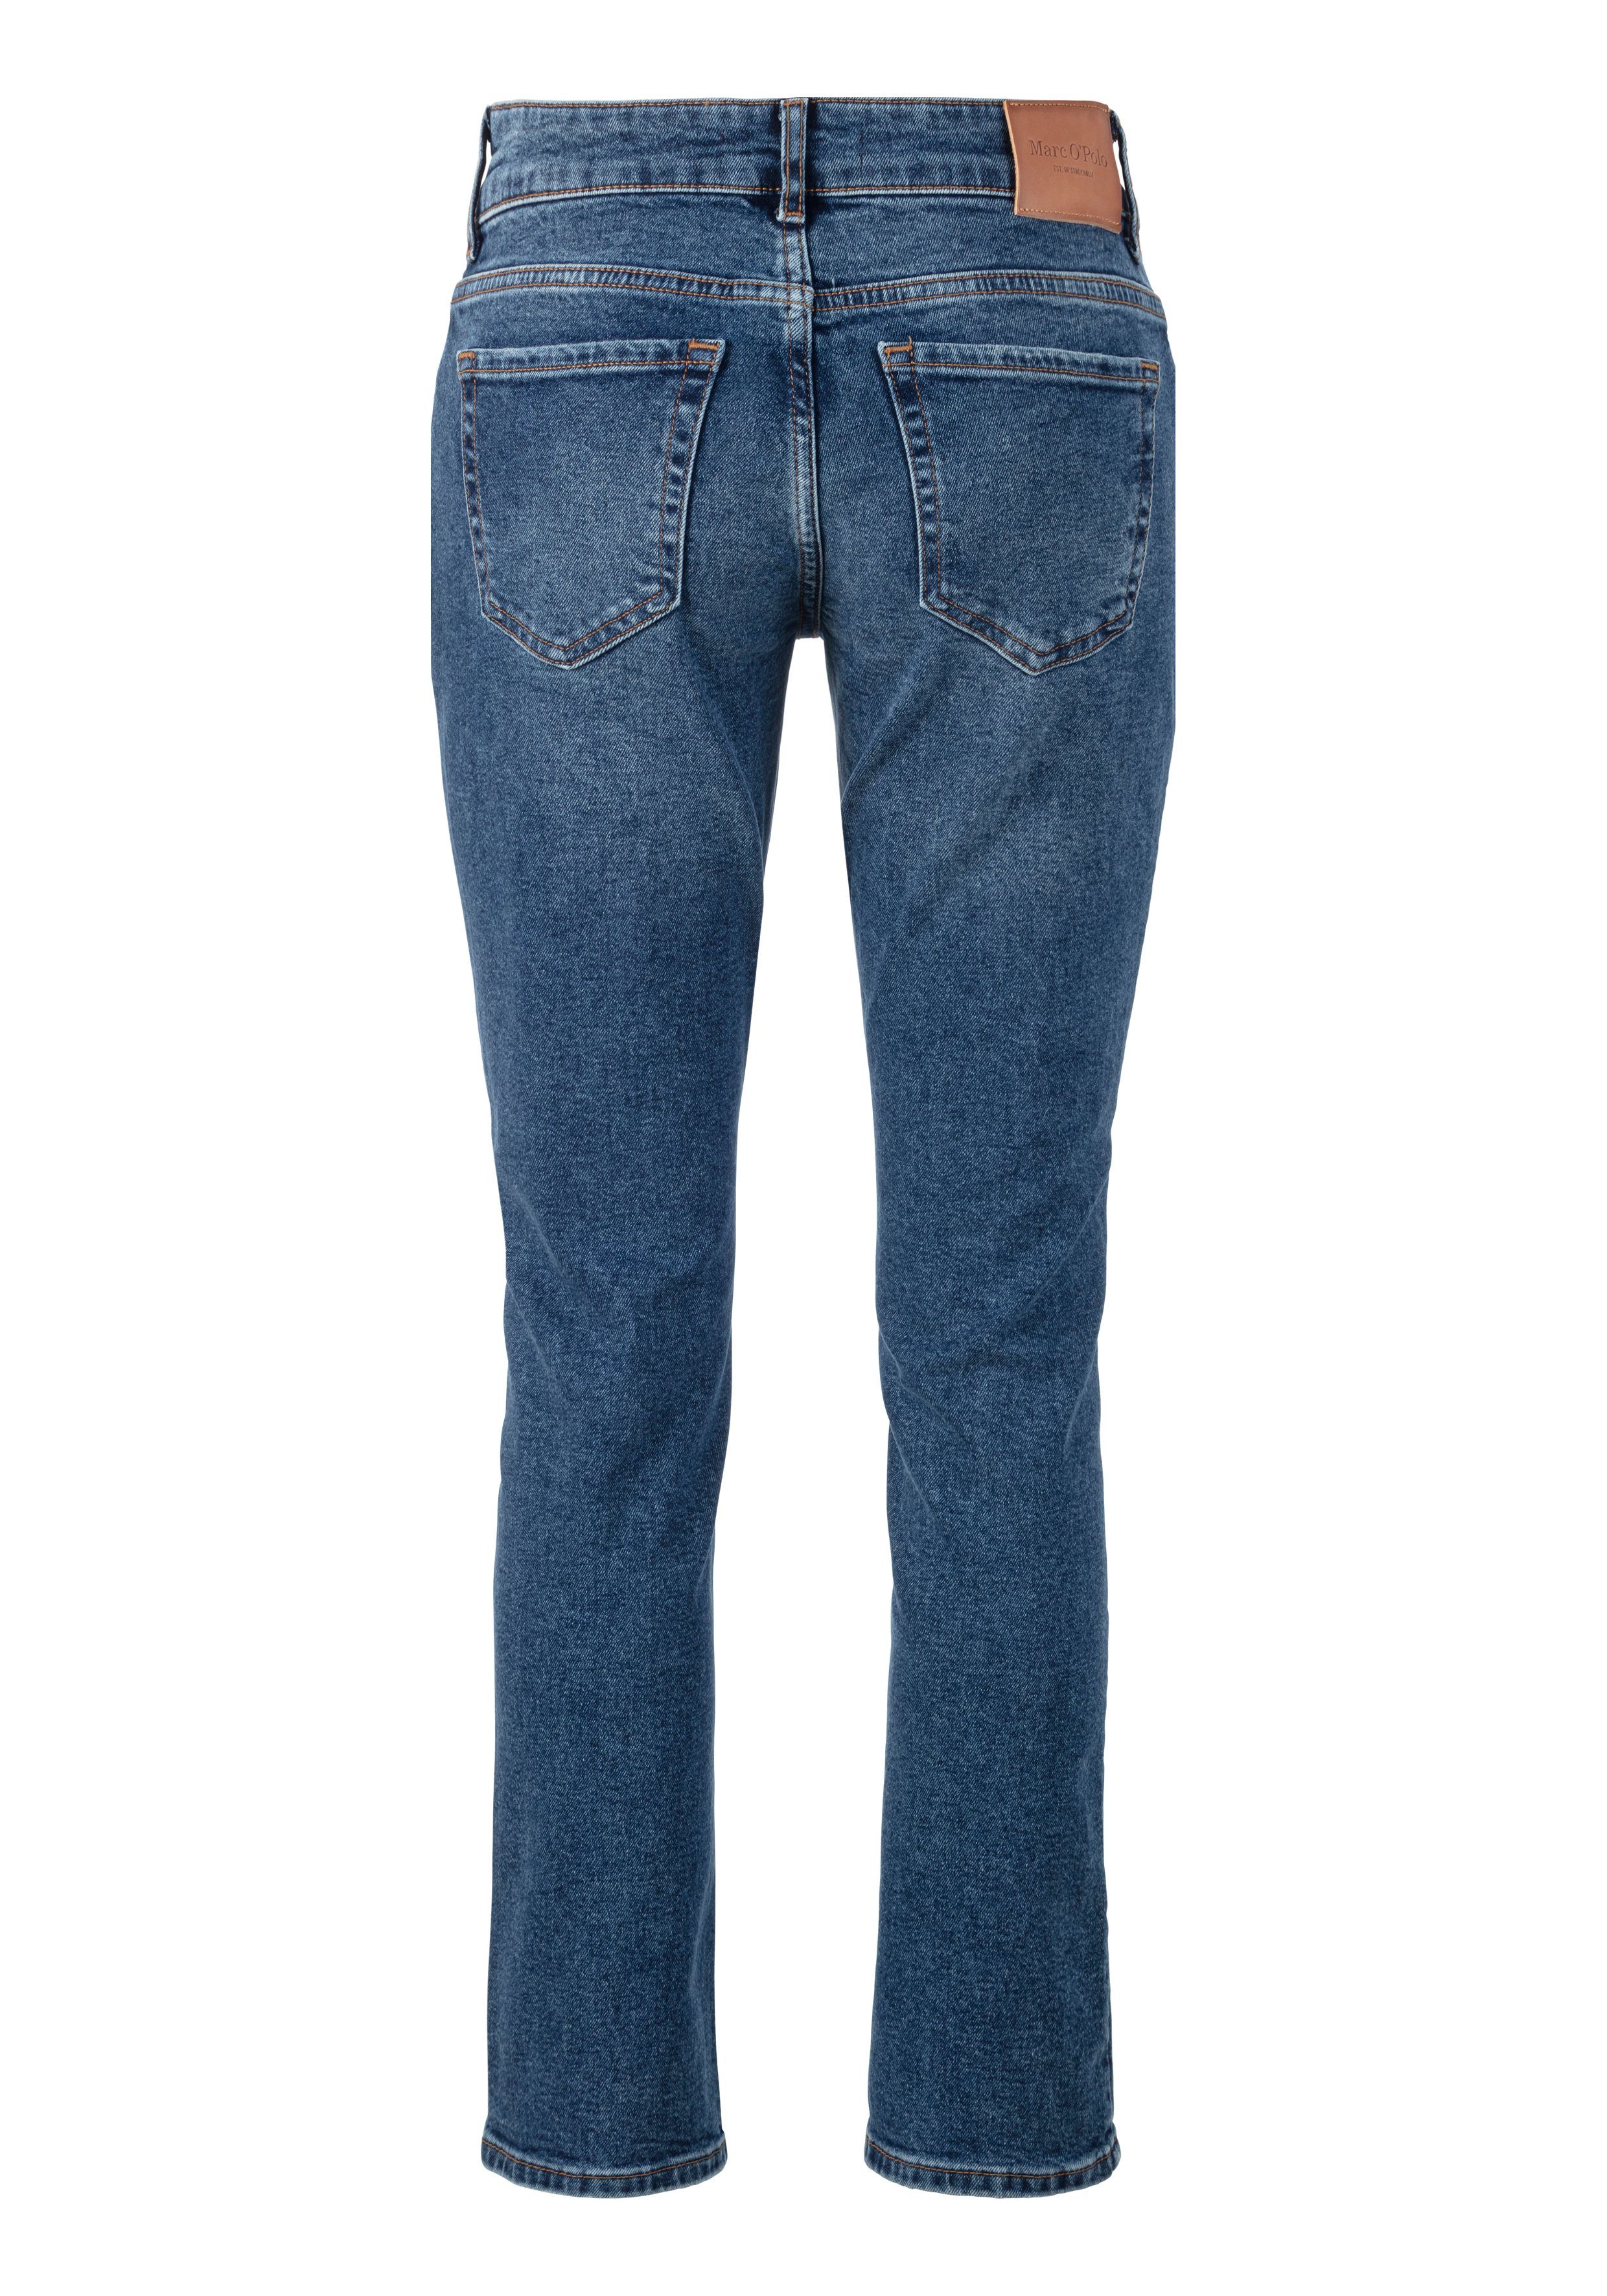 Marc O'Polo 5-pocket jeans Alby Straight met rechte pijpen